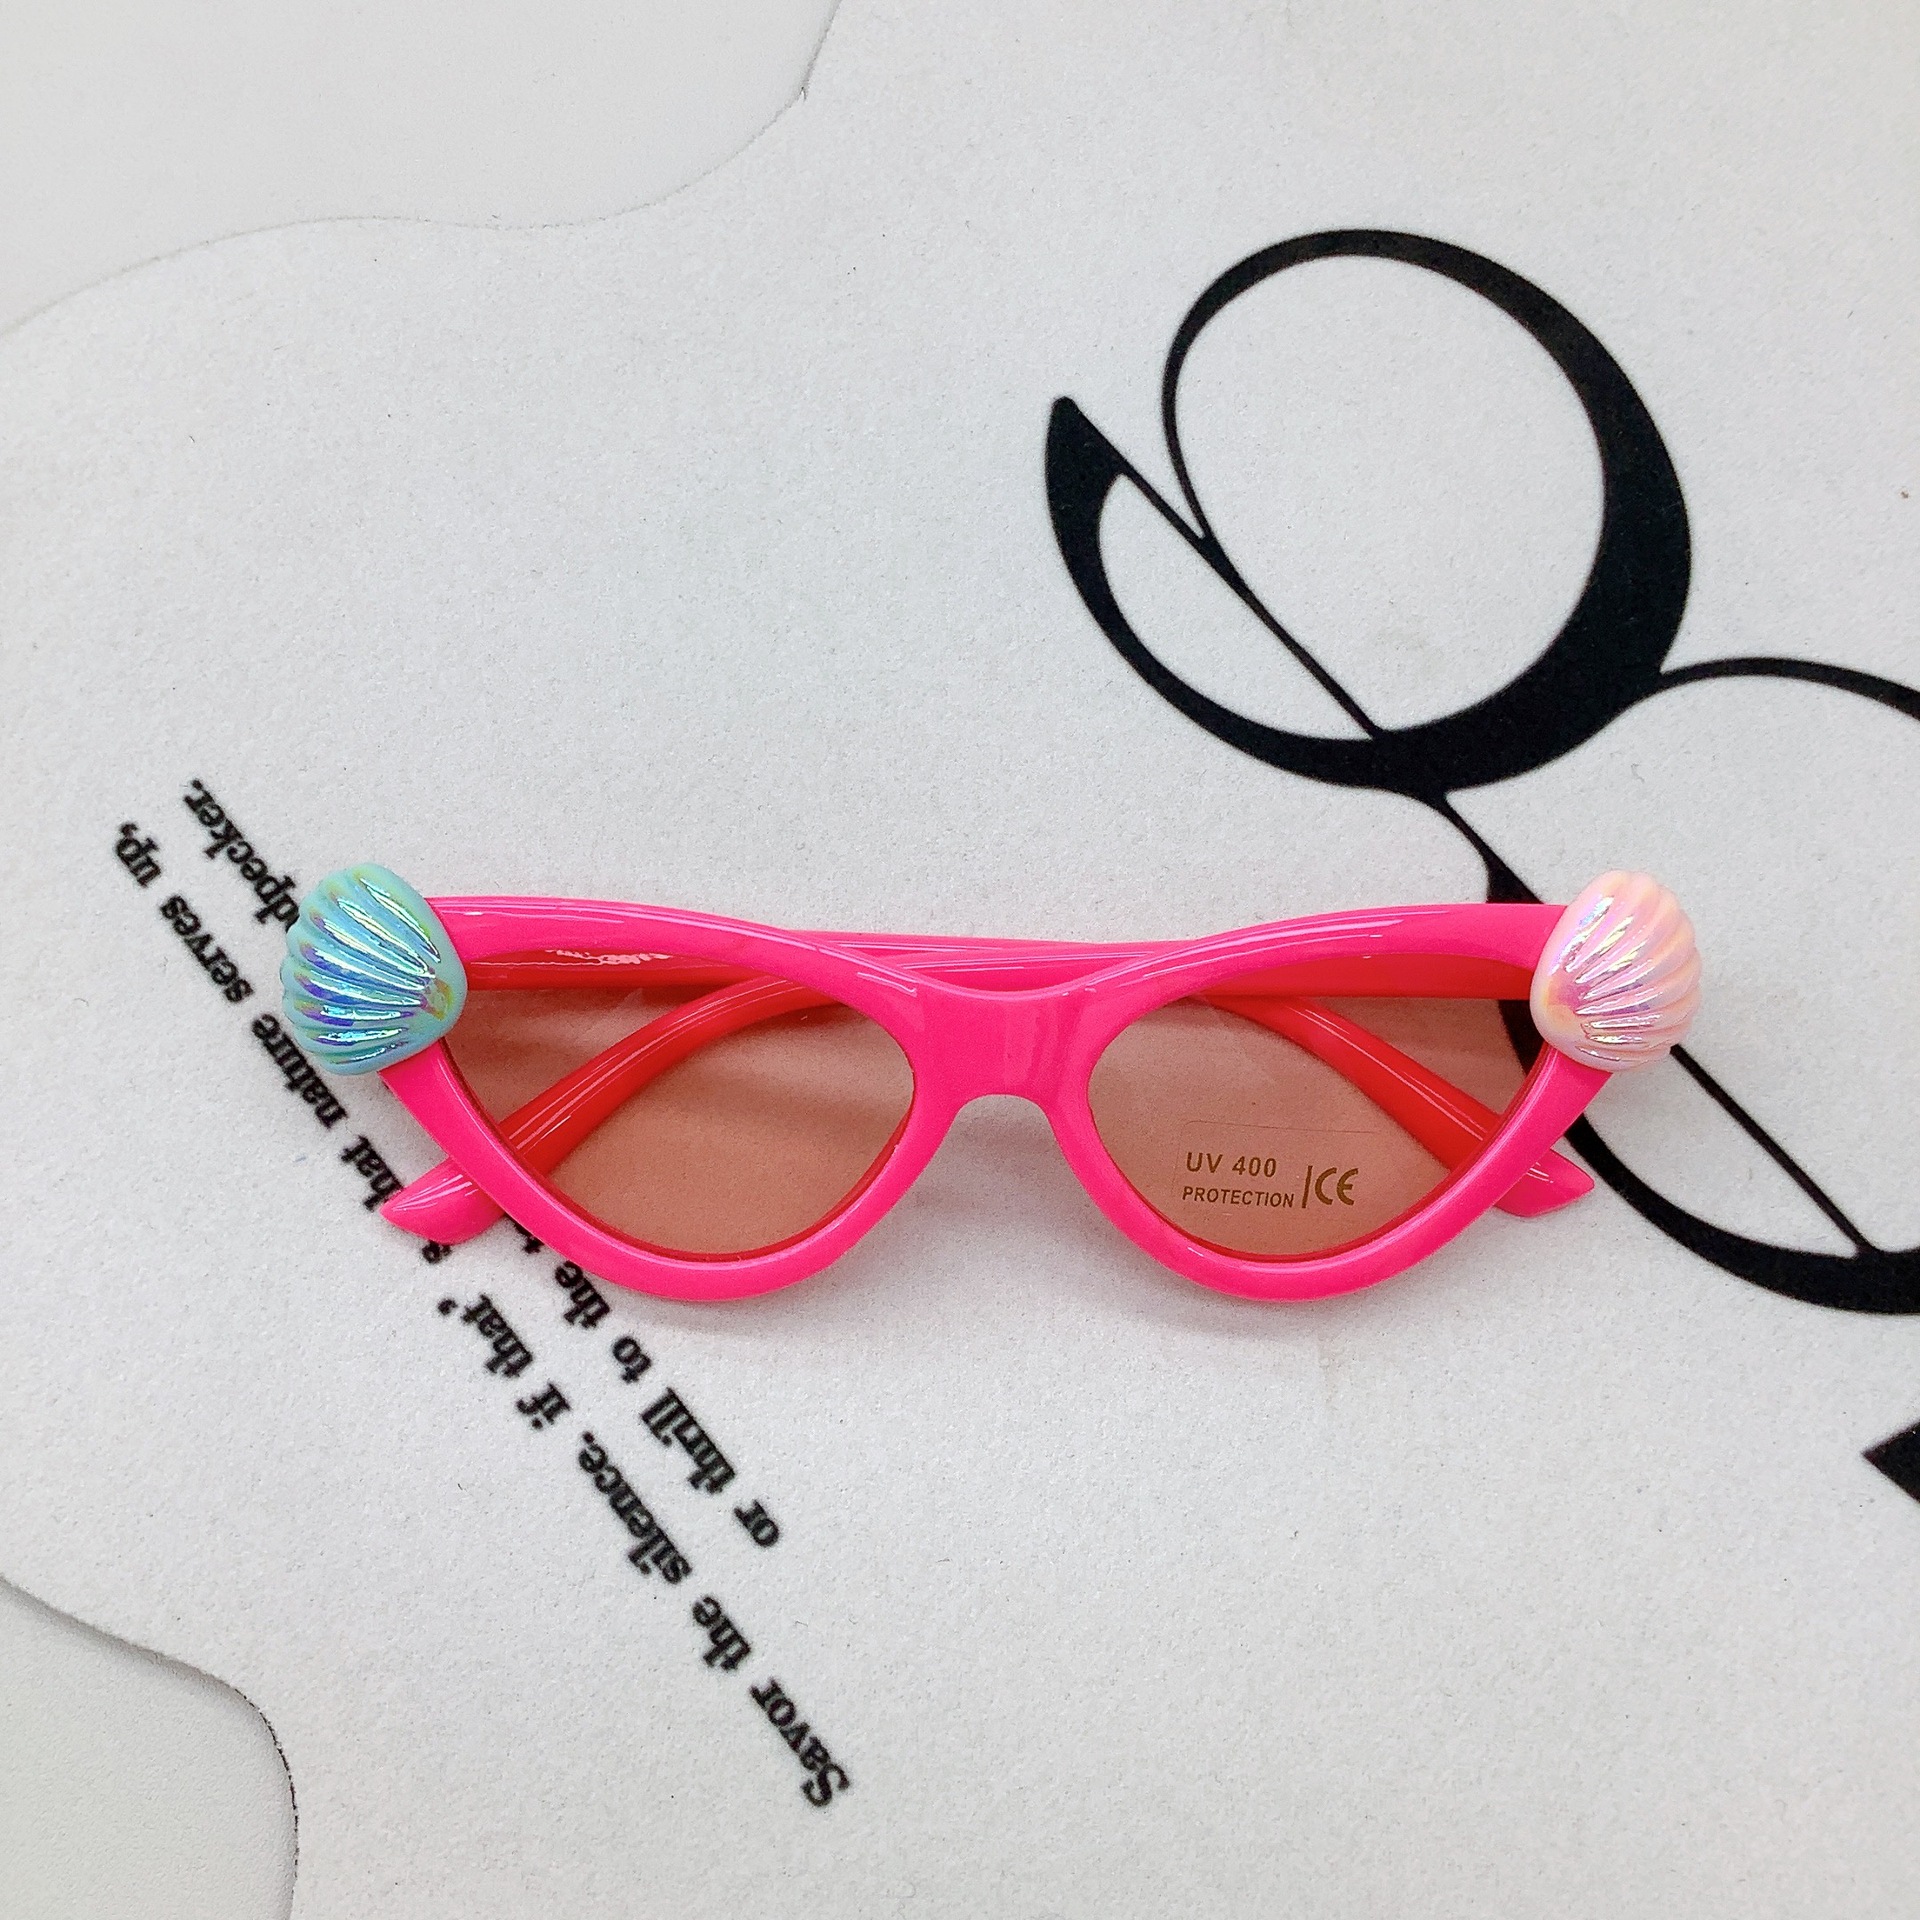 New DIY Kids Sunglasses Sunlight Blocker for Summer Boys and Girls Sunglasses Cute Shell UV Protection